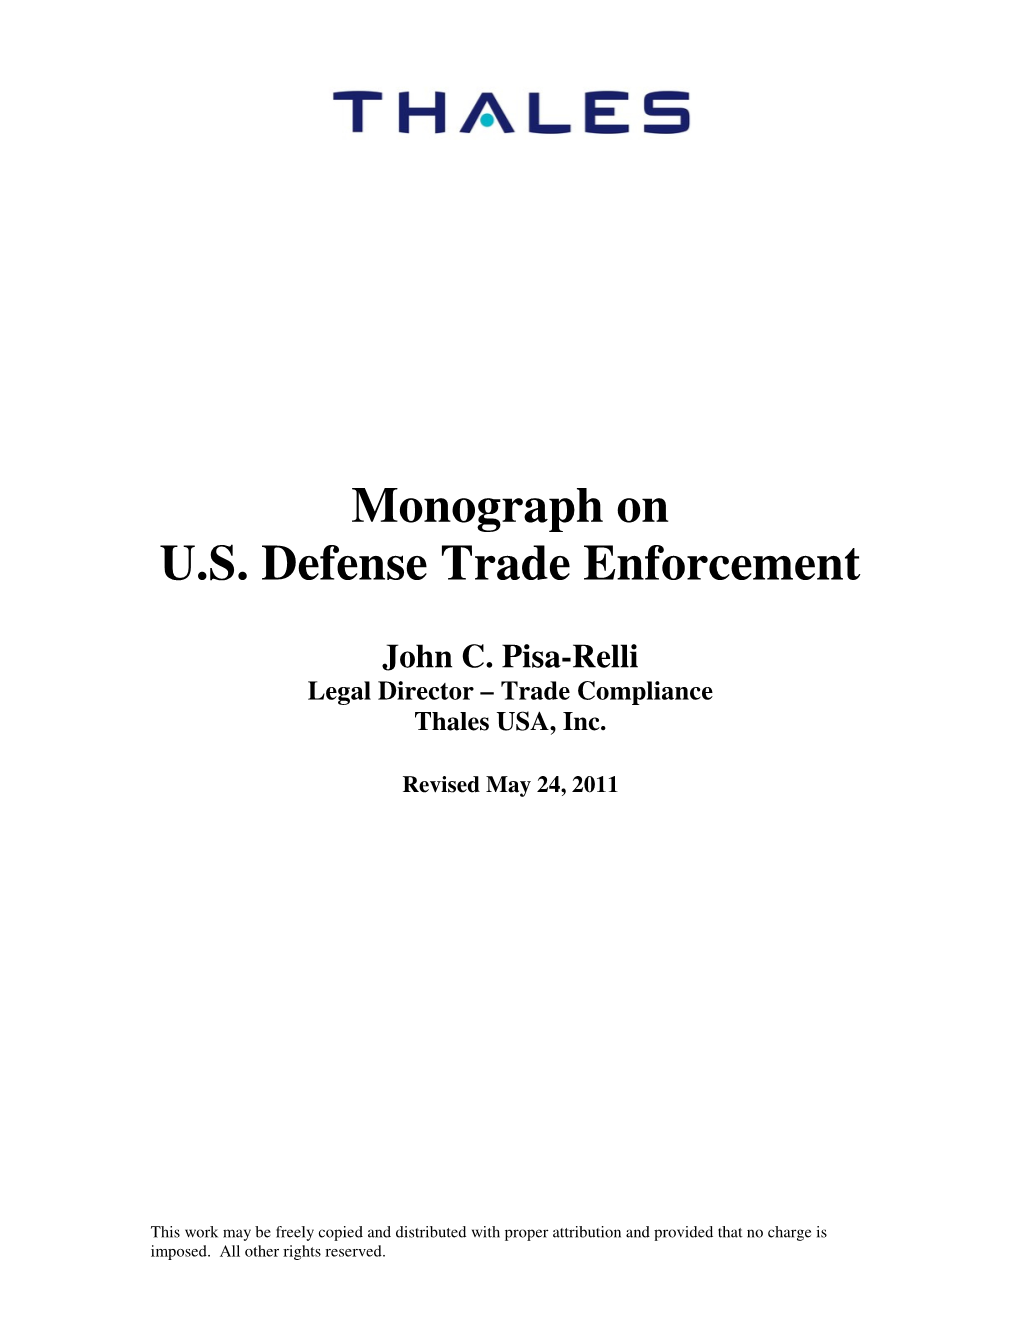 Monograph on U.S. Defense Trade Enforcement